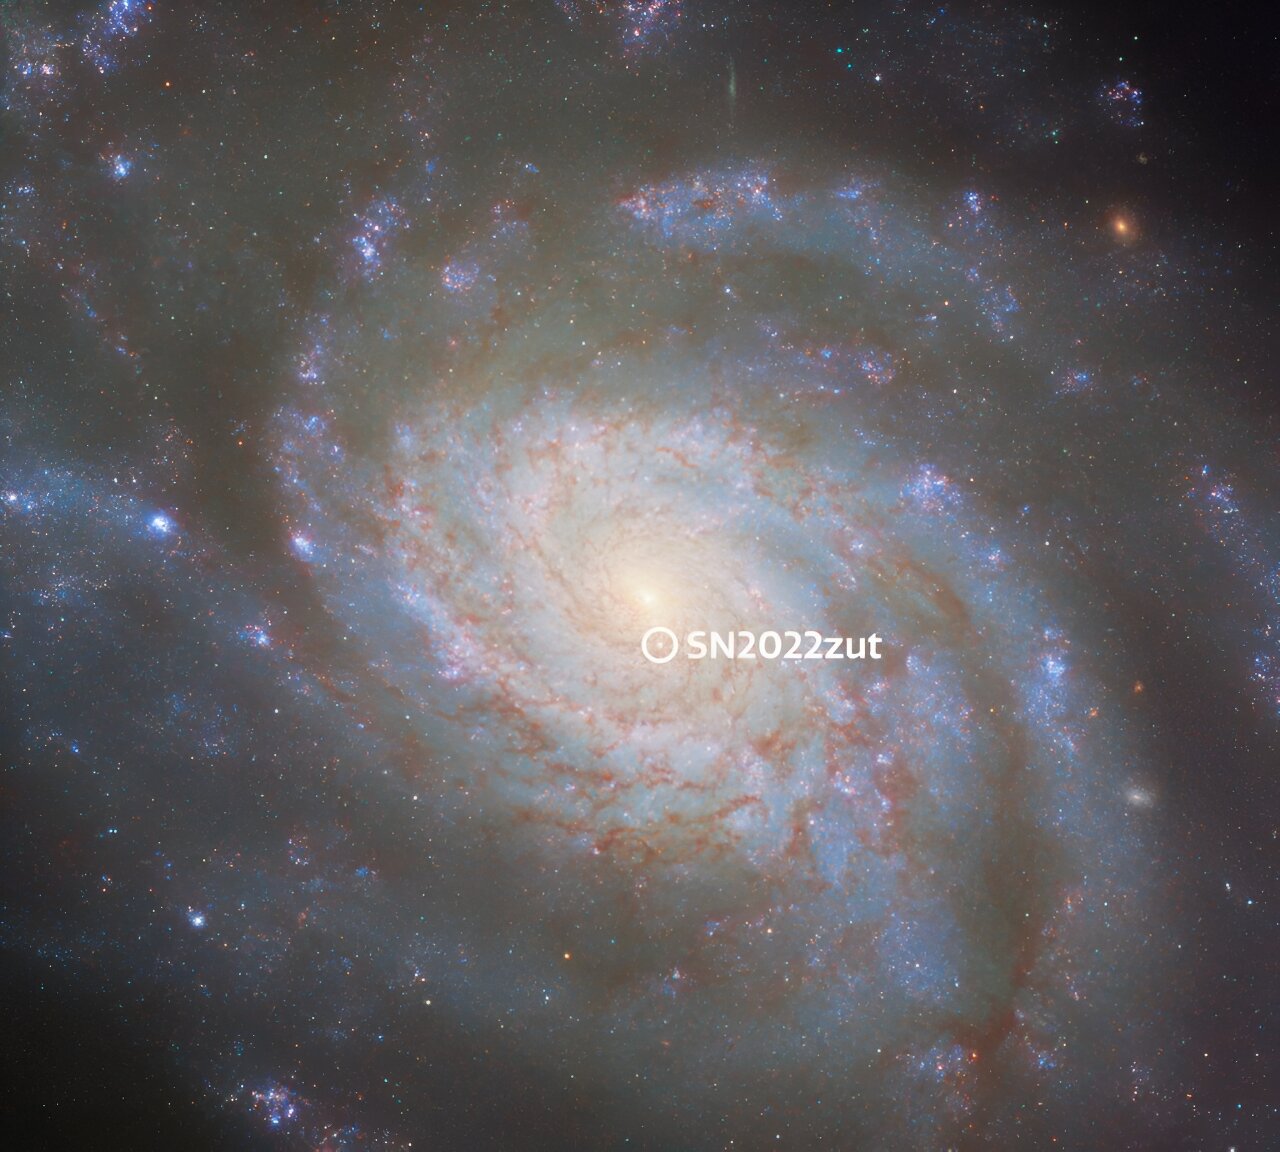 Hubble Space Telescope Measures Distance to Supernova